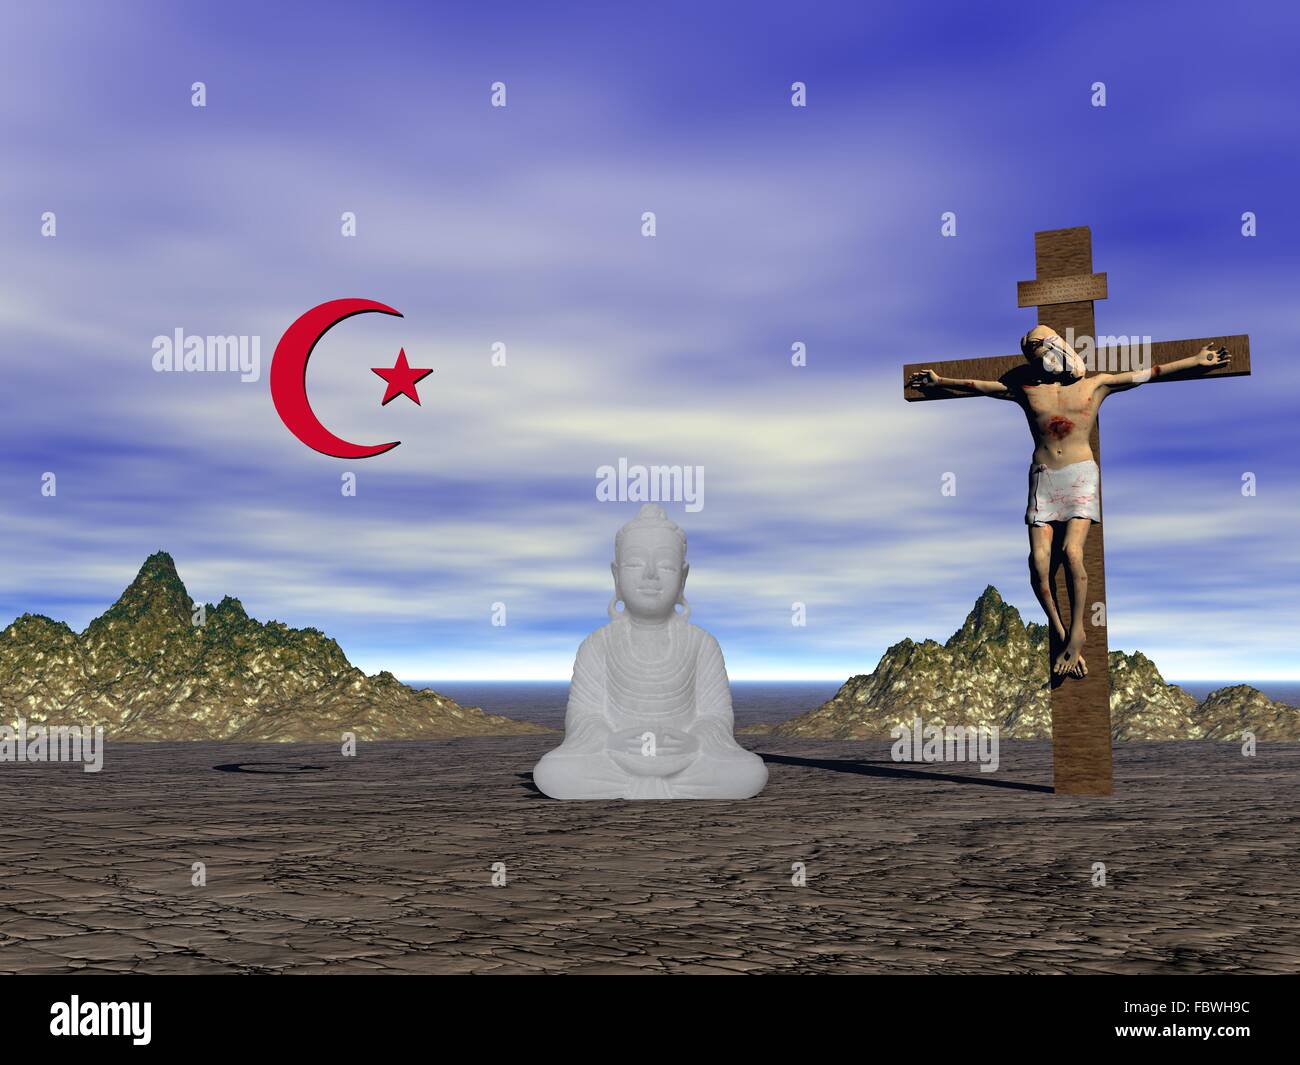 Religious symbols Stock Photo